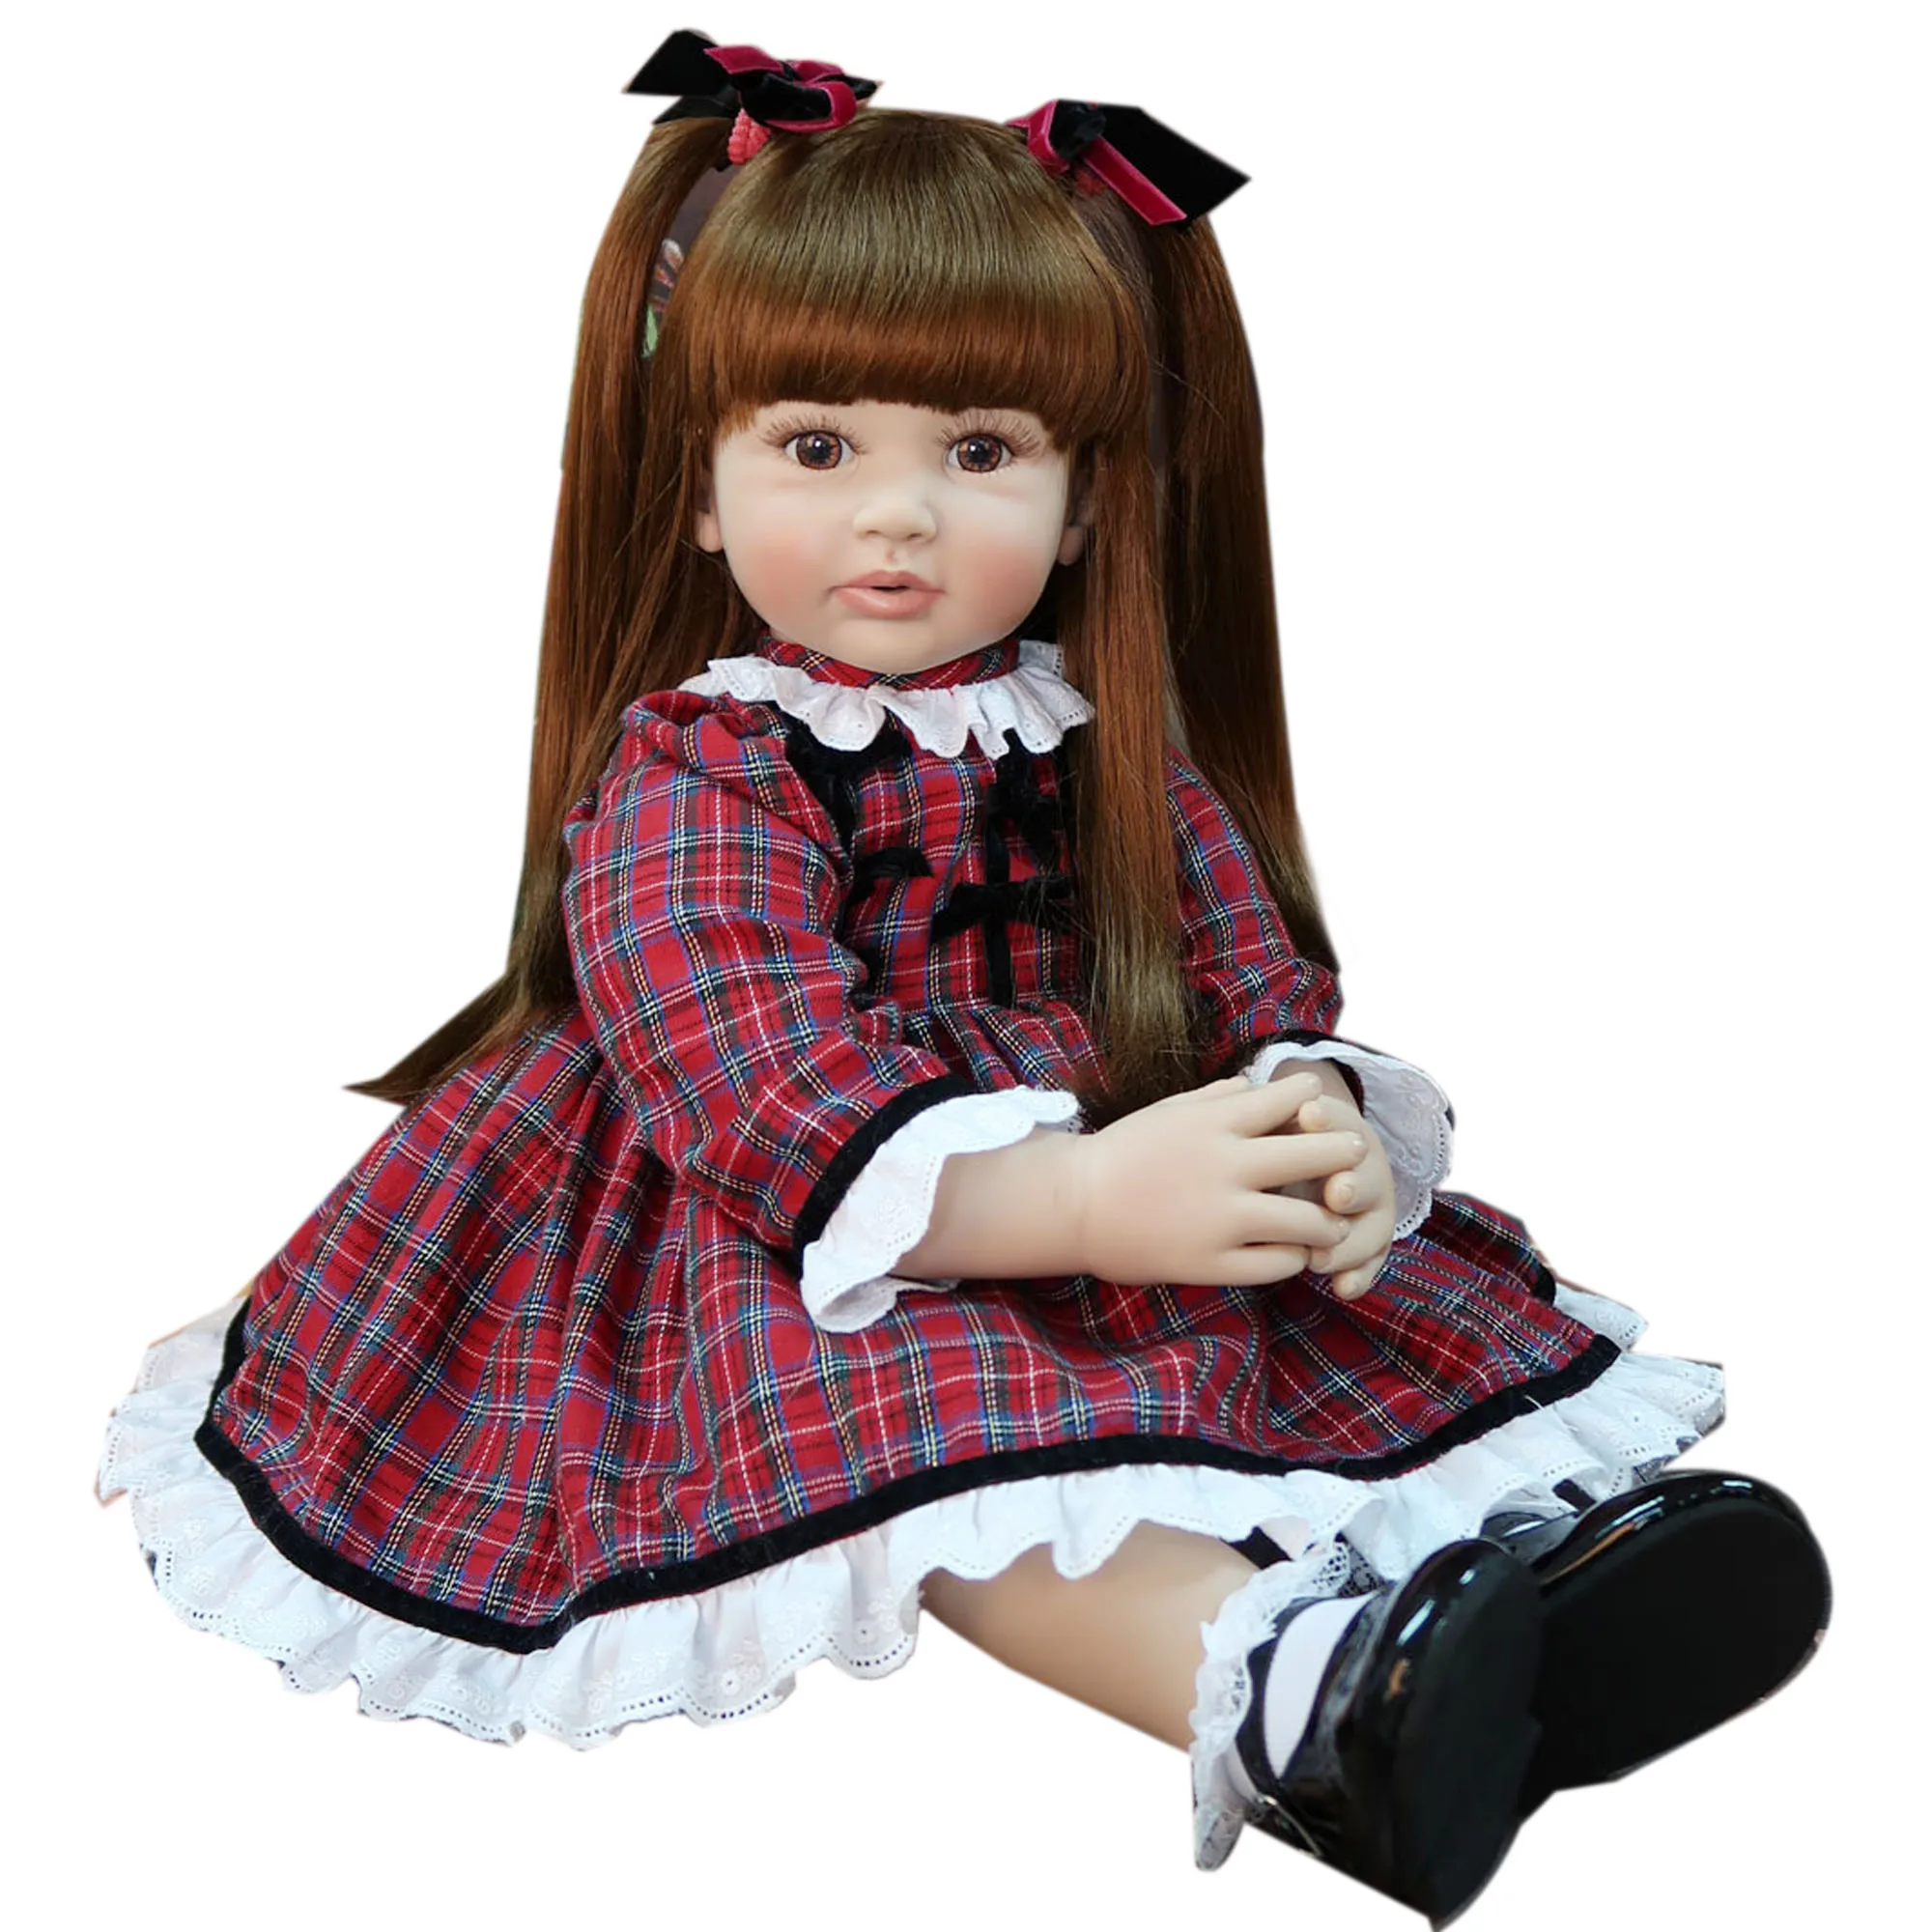 

60cm Exclusive style Silicone Reborn Baby Doll Vinyl Princess Toddler Toy Like Alive Bebe Girl Boneca Child Birthday Gift